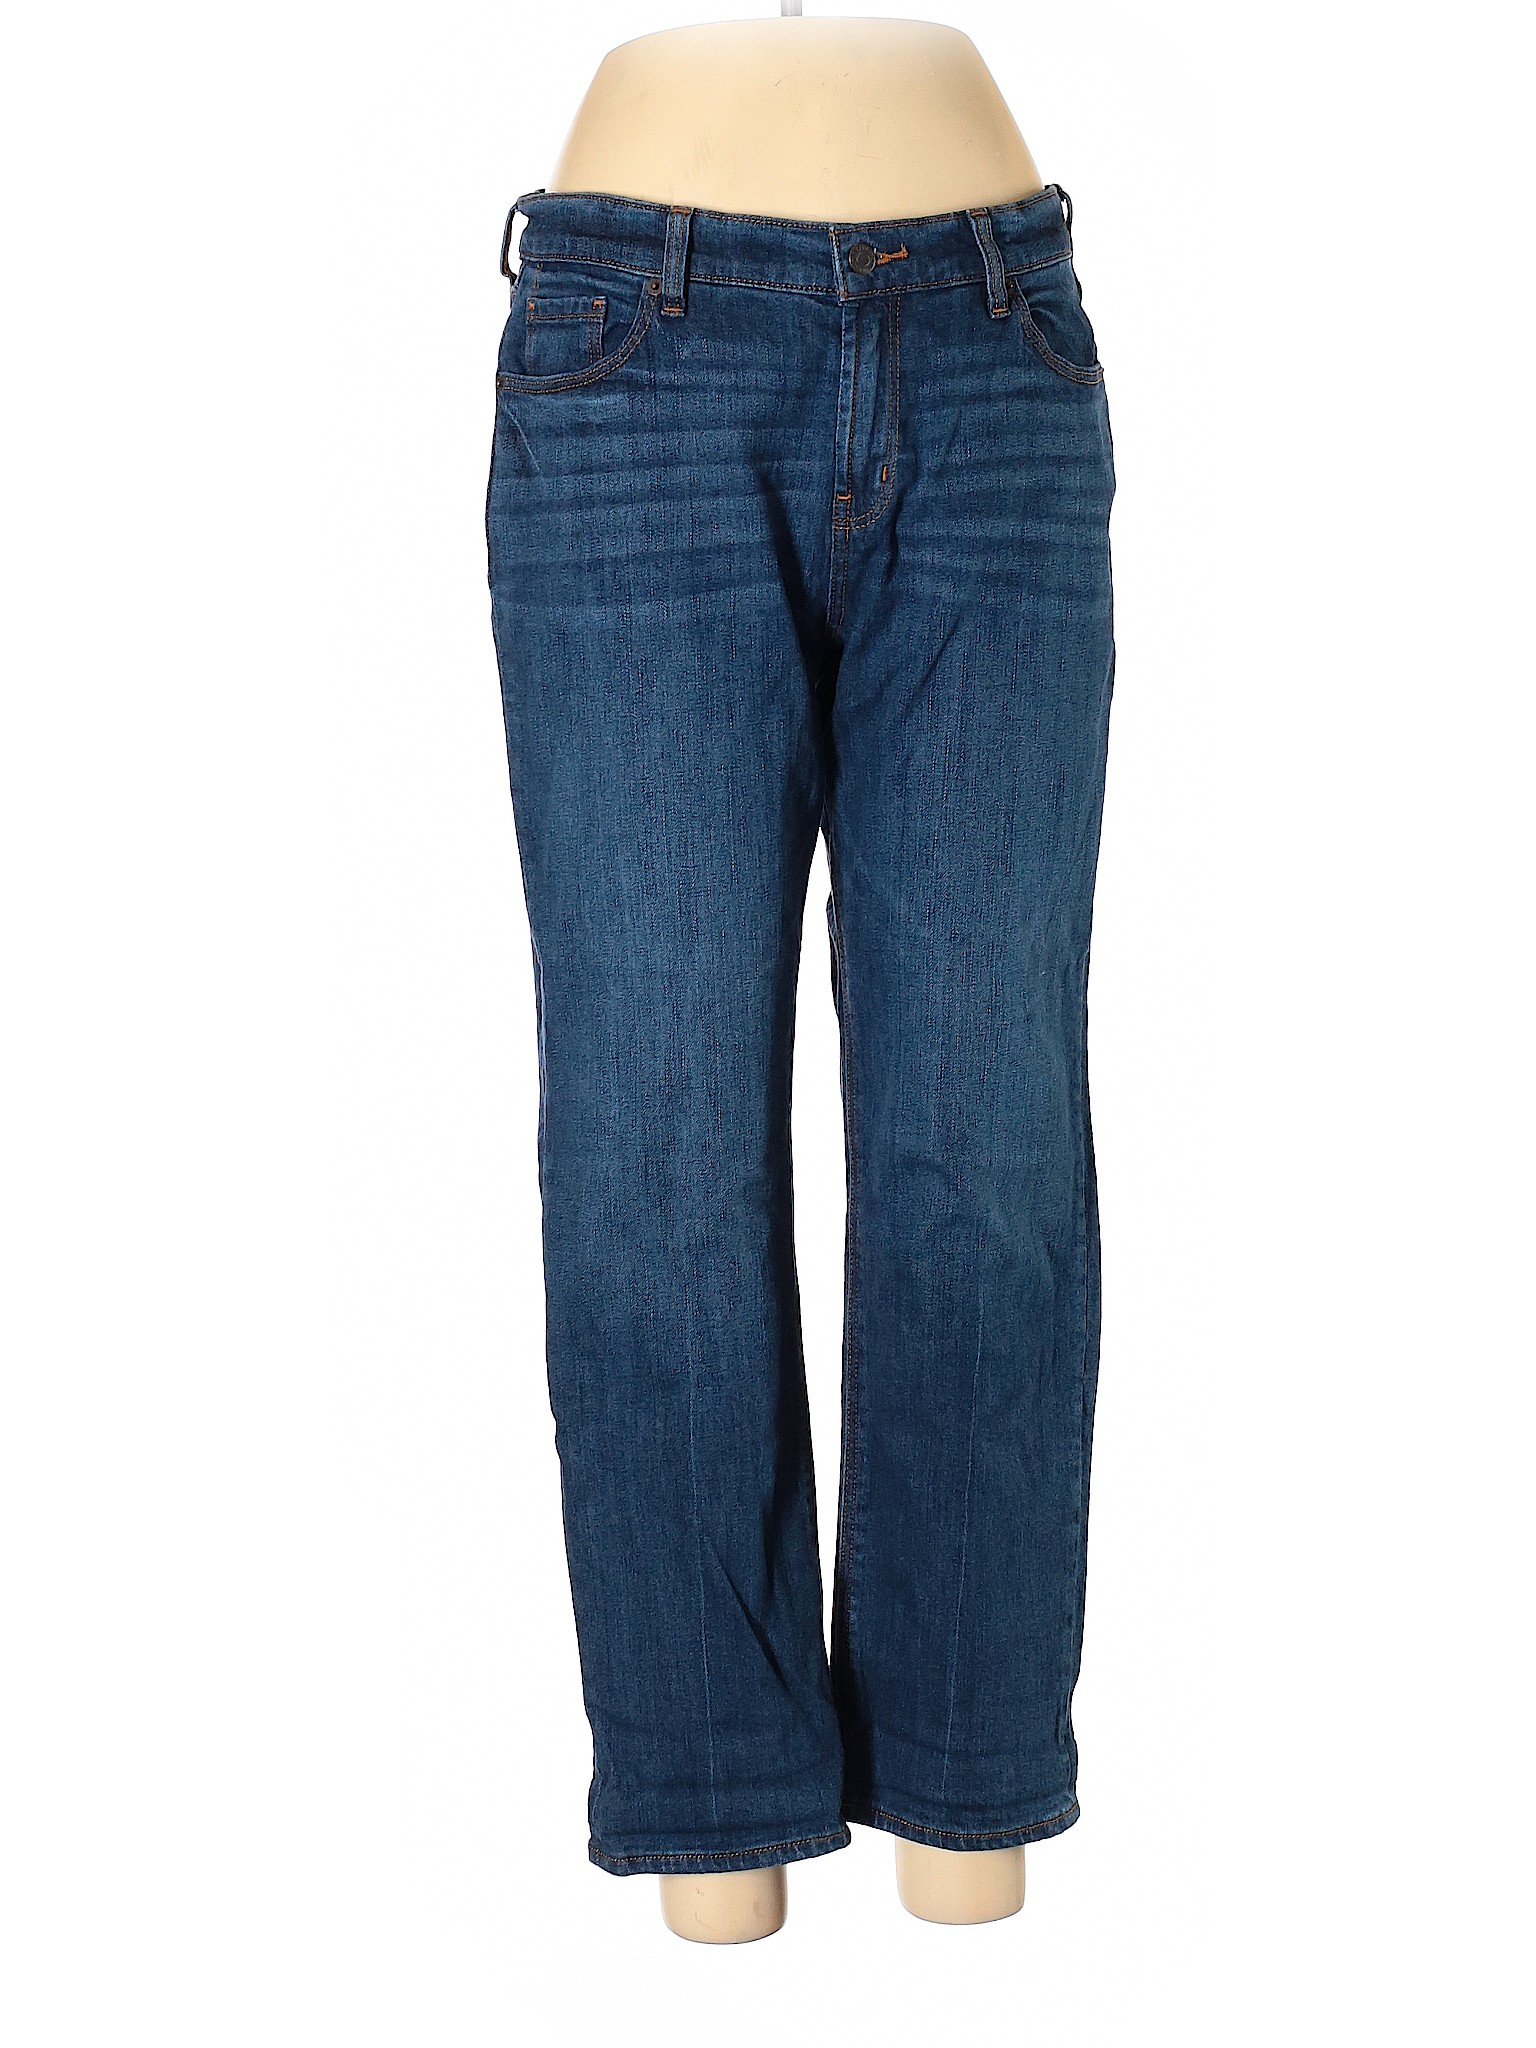 Old Navy Women Blue Jeans 10 Petites | eBay